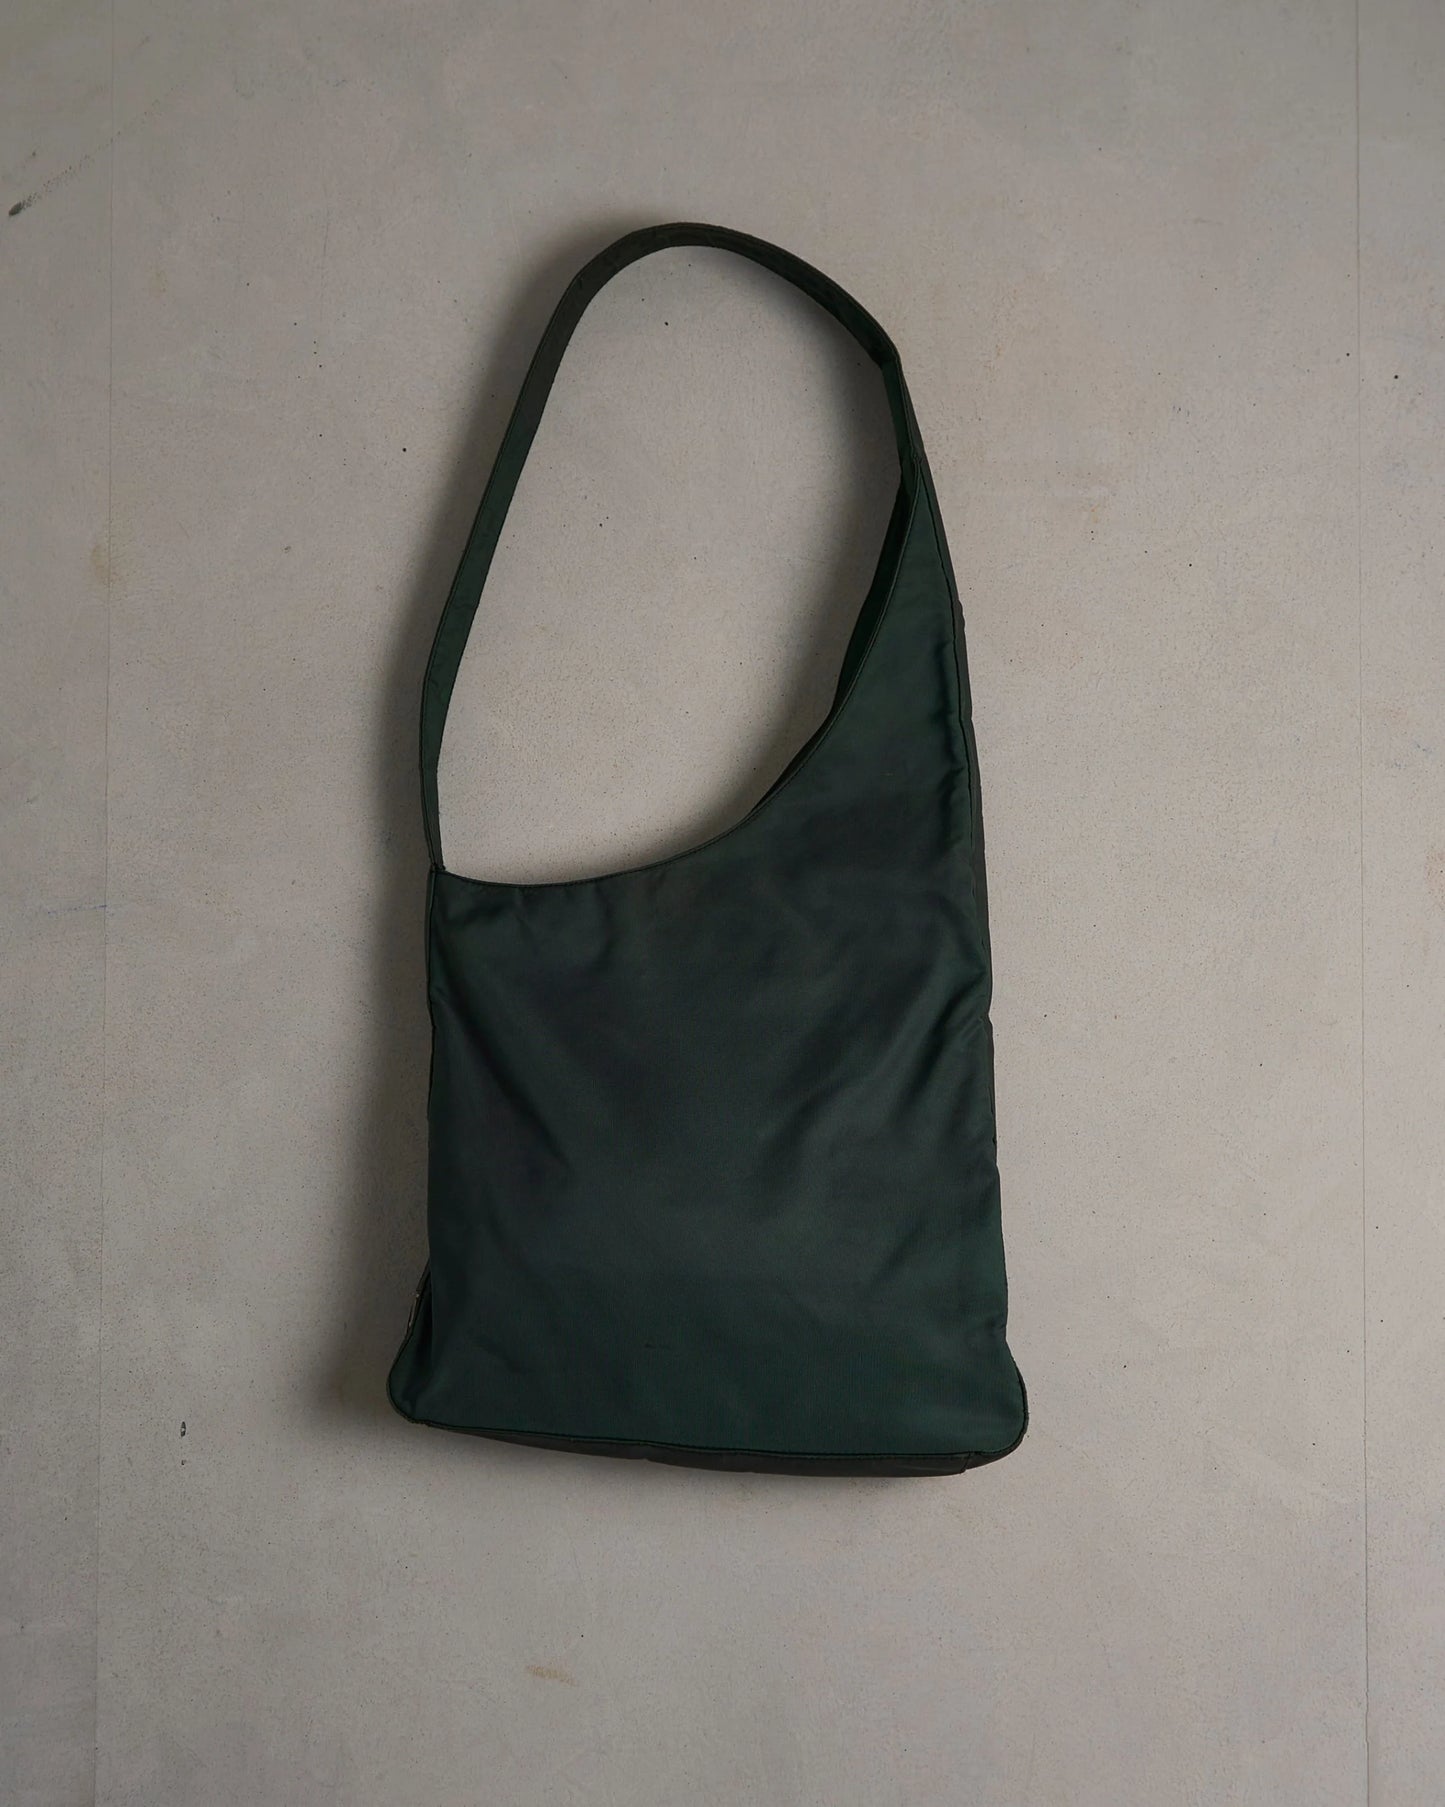 Vintage Prada Bag 